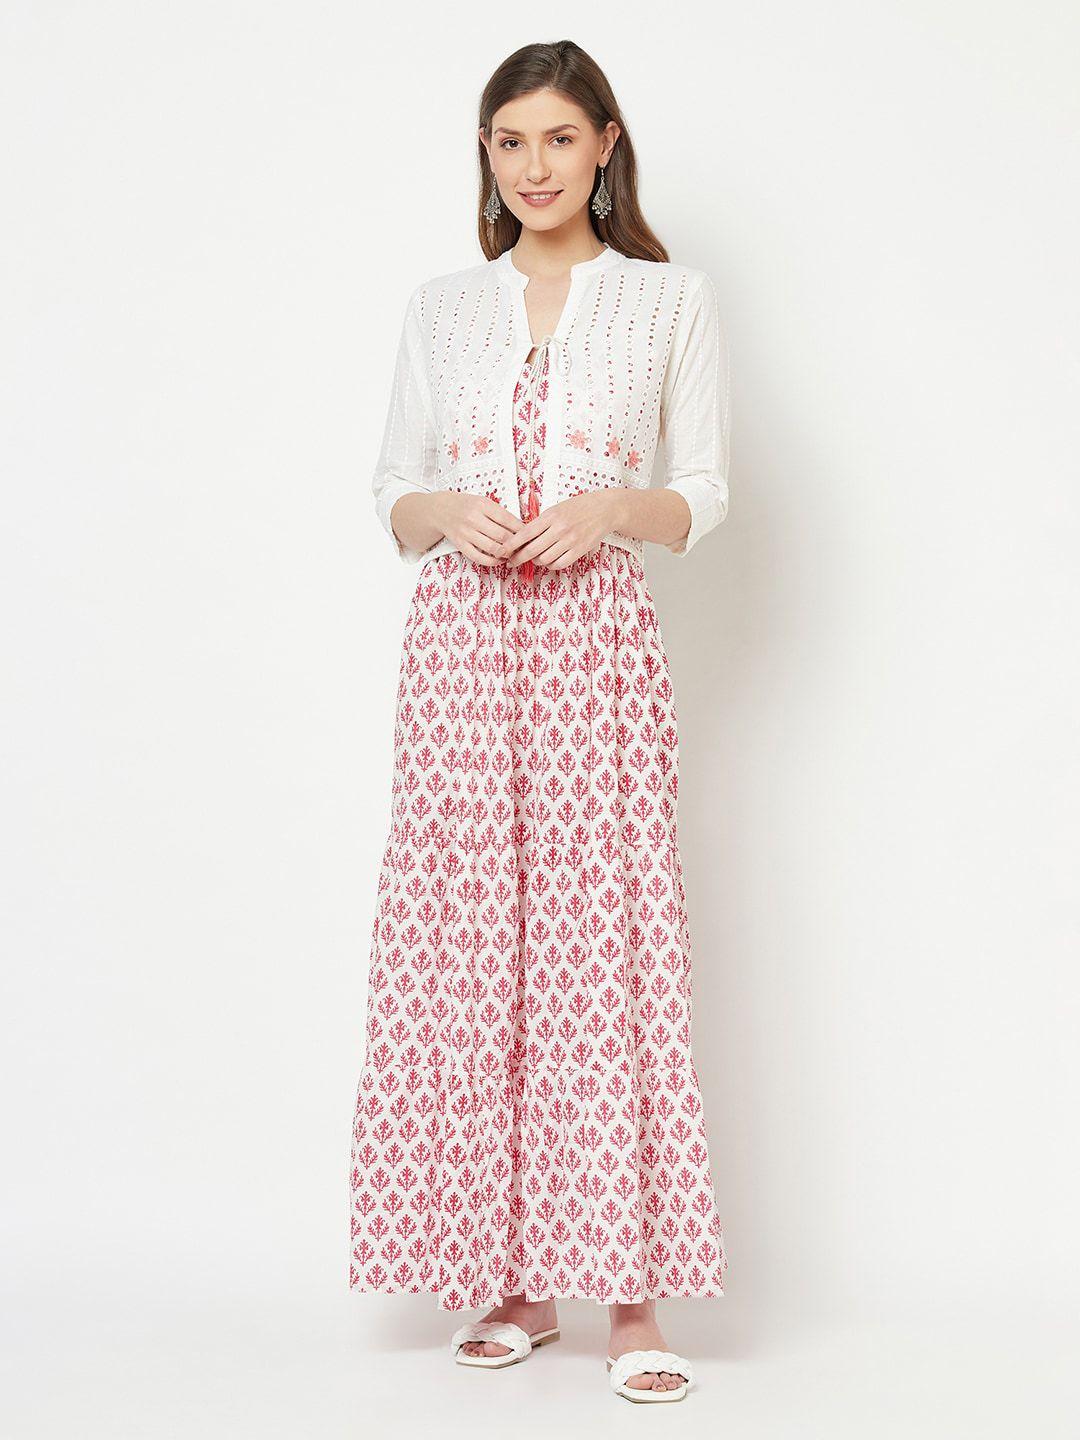 kalini red & white ethnic motifs cotton maxi dress with jacket